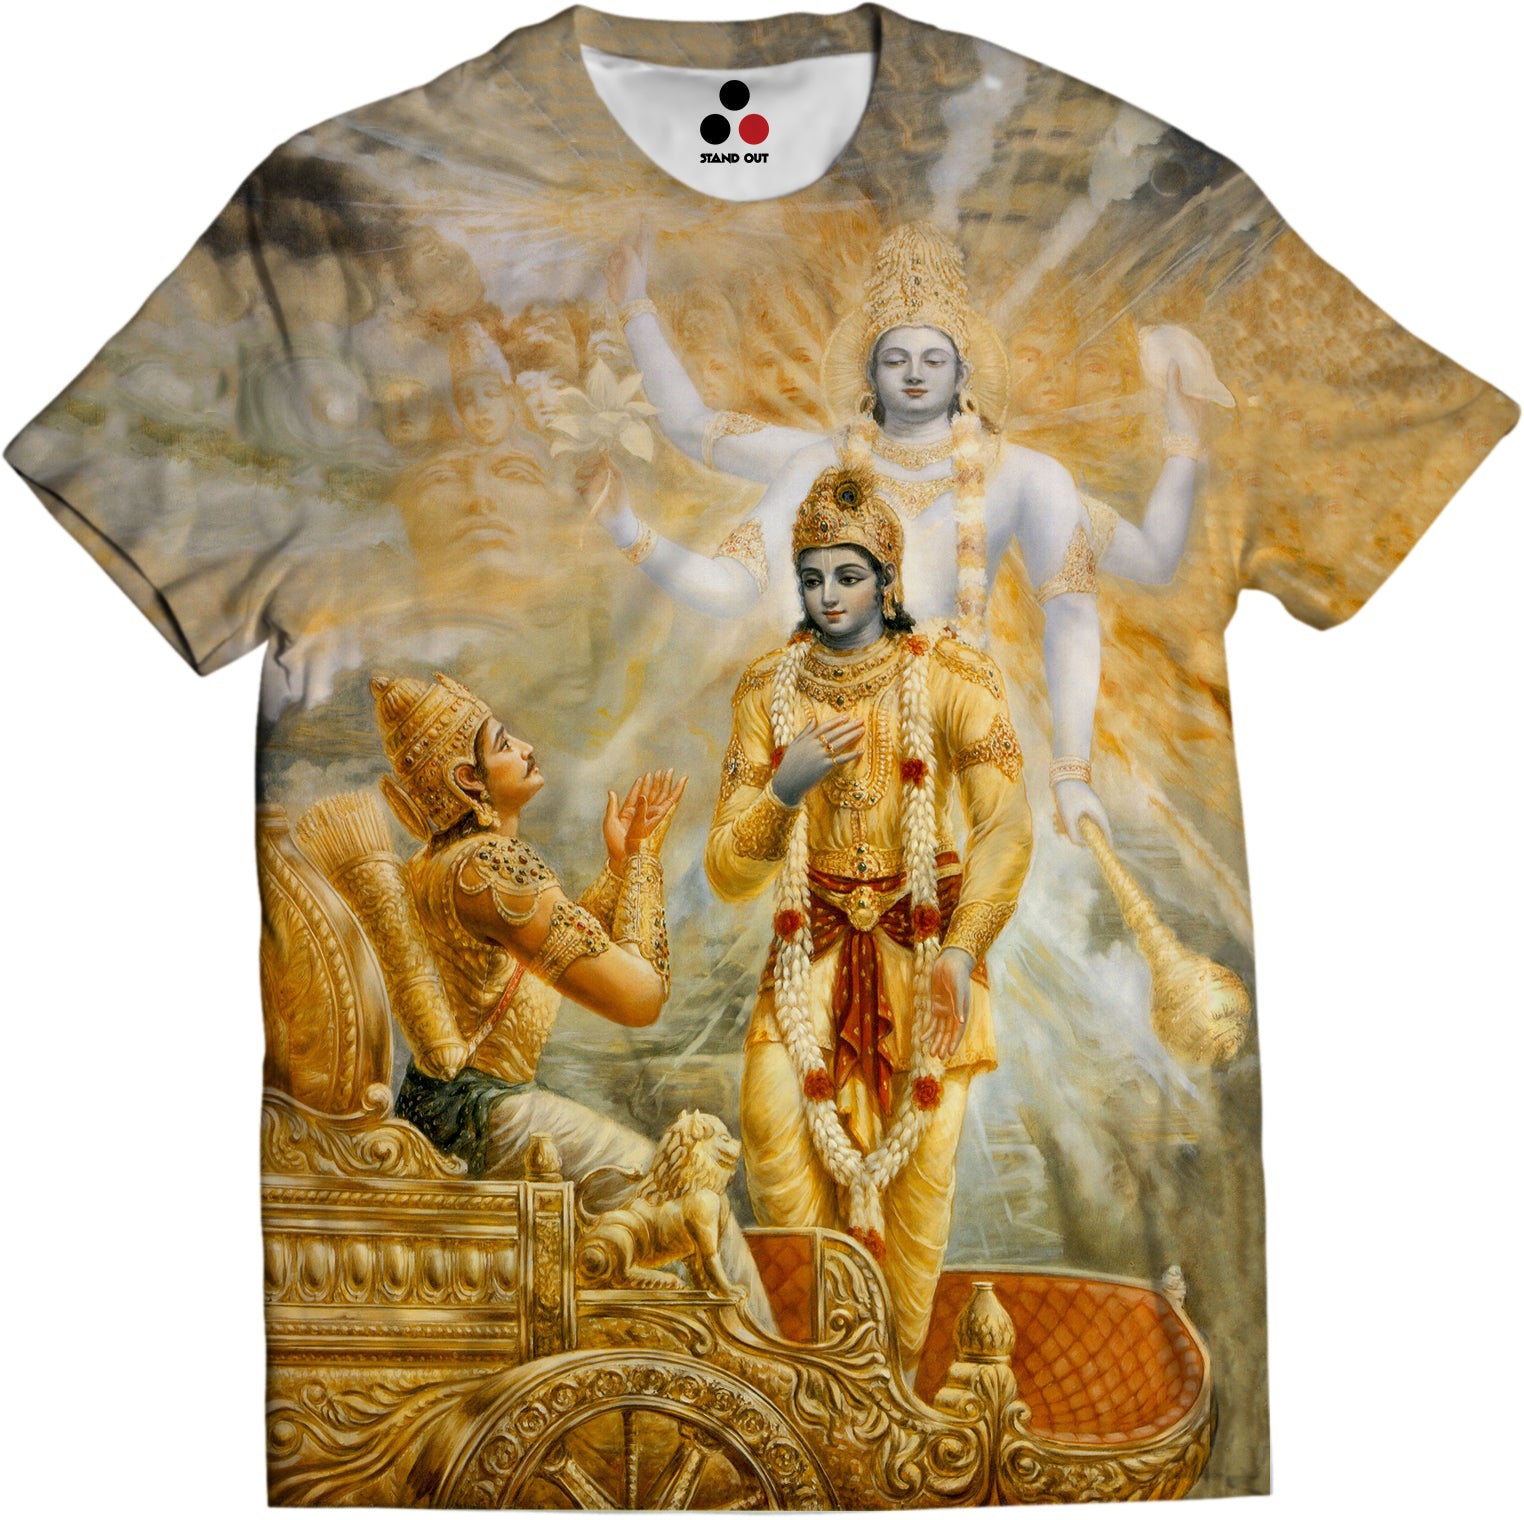 krishna printed t shirts online india